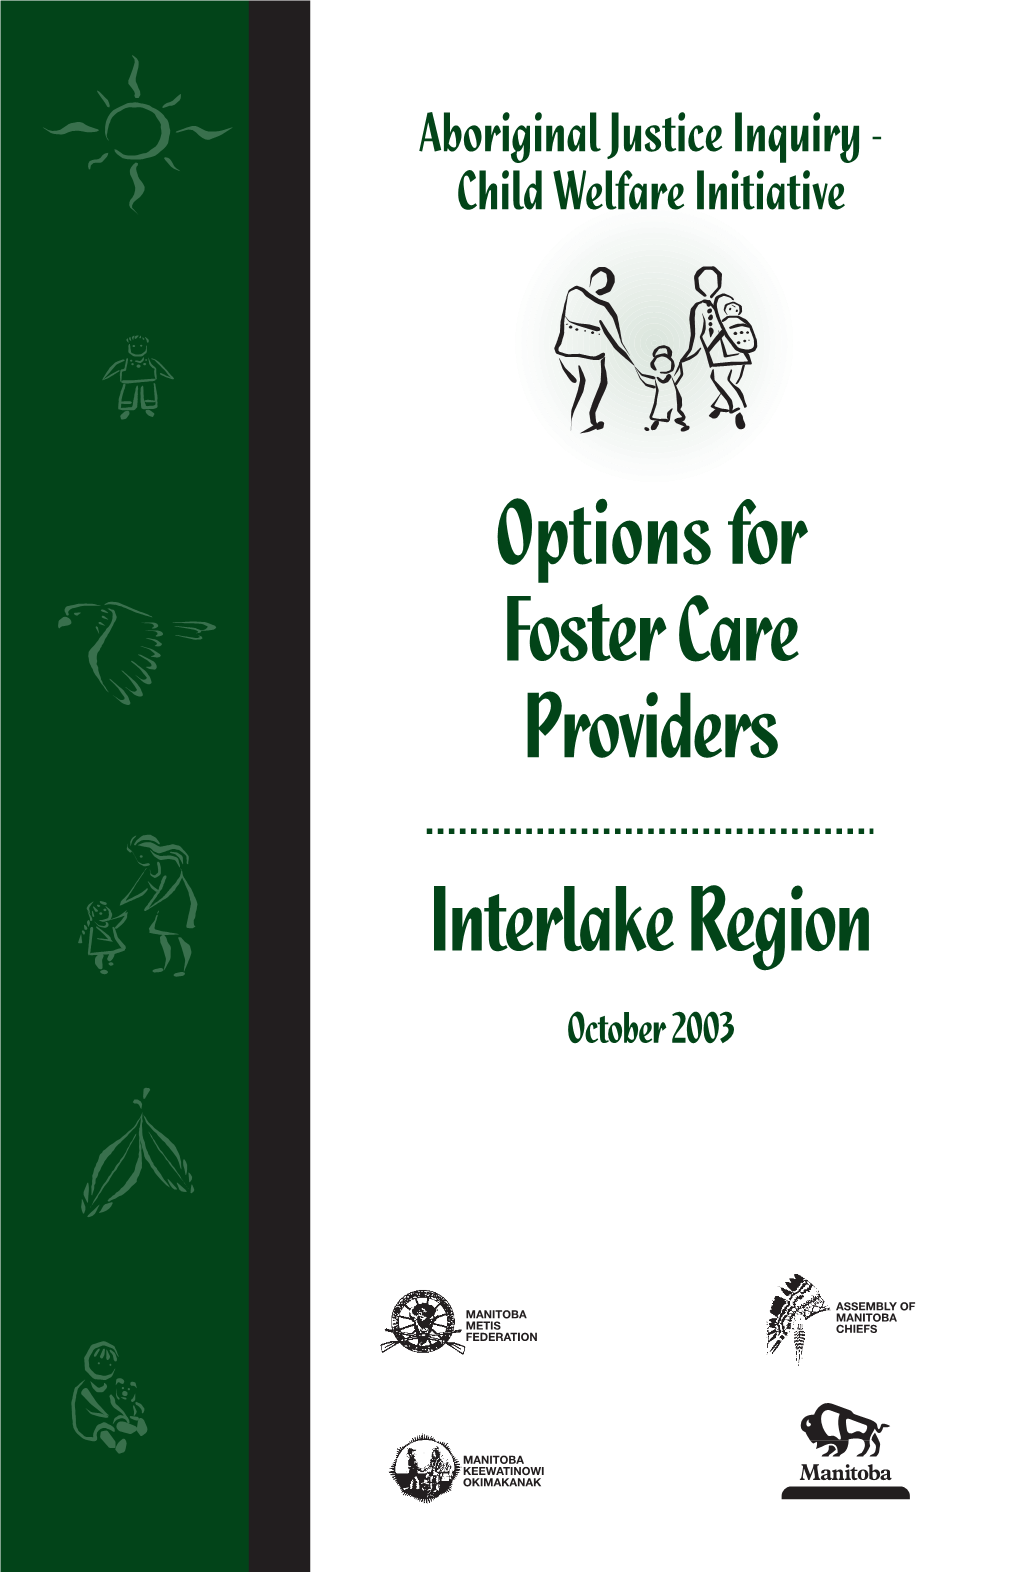 Interlake Region Options for Foster Care Providers